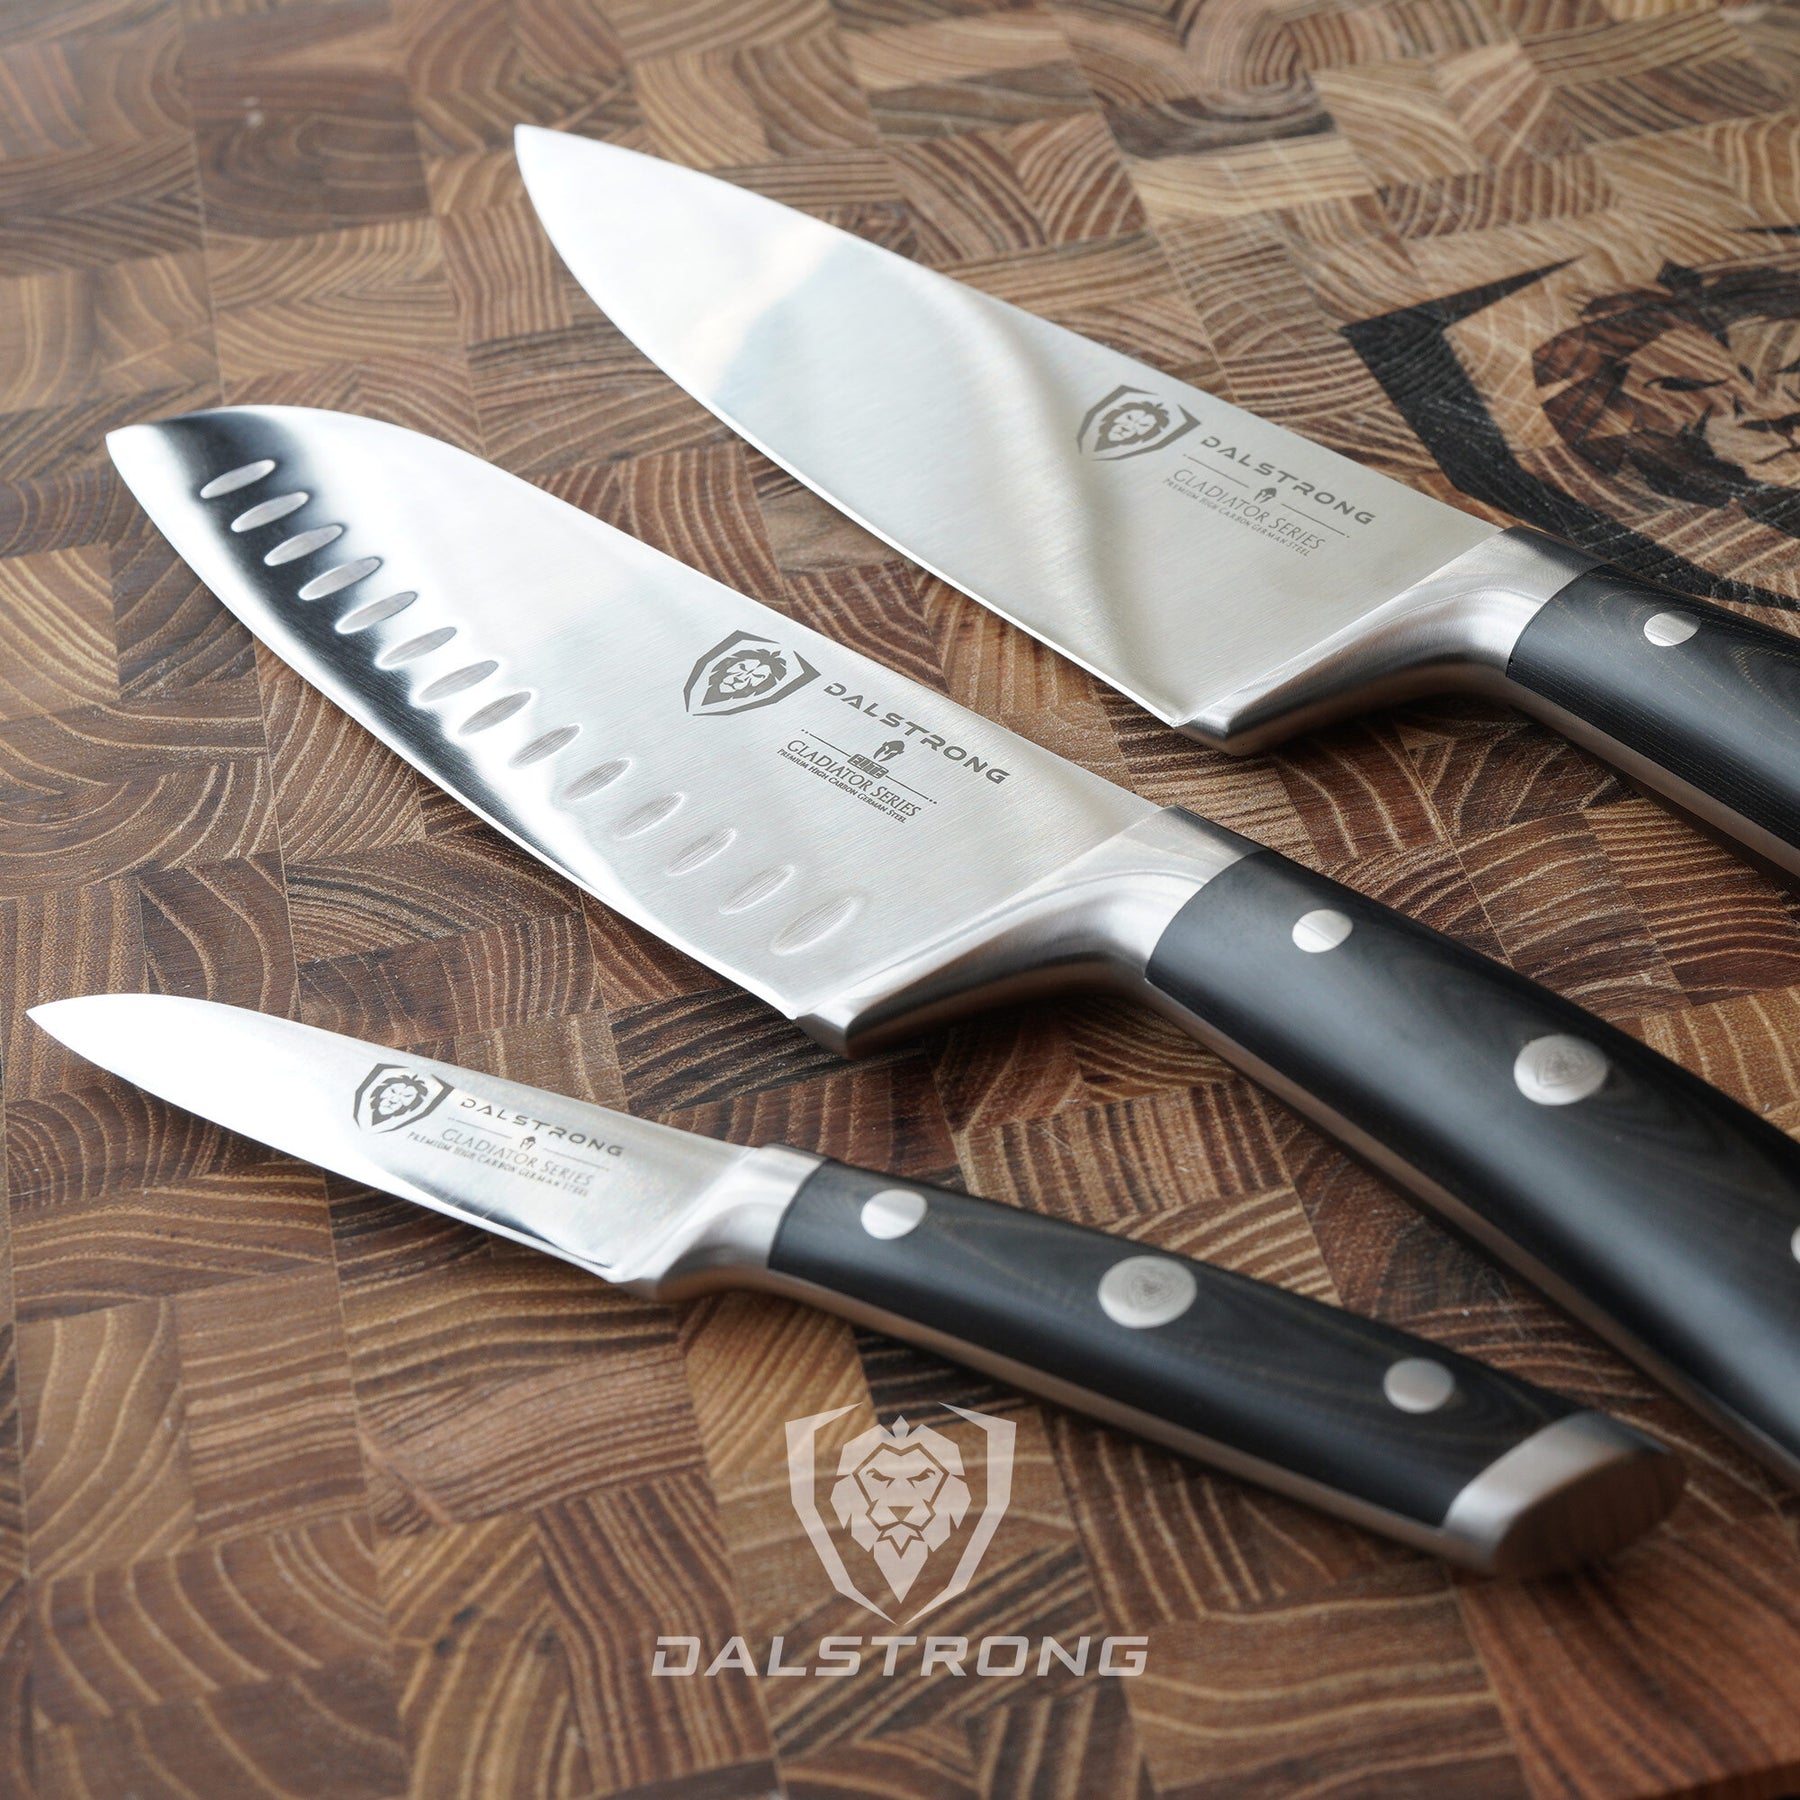 Dalstrong Knife Set Sale October 2019: New Deal on Gladiator